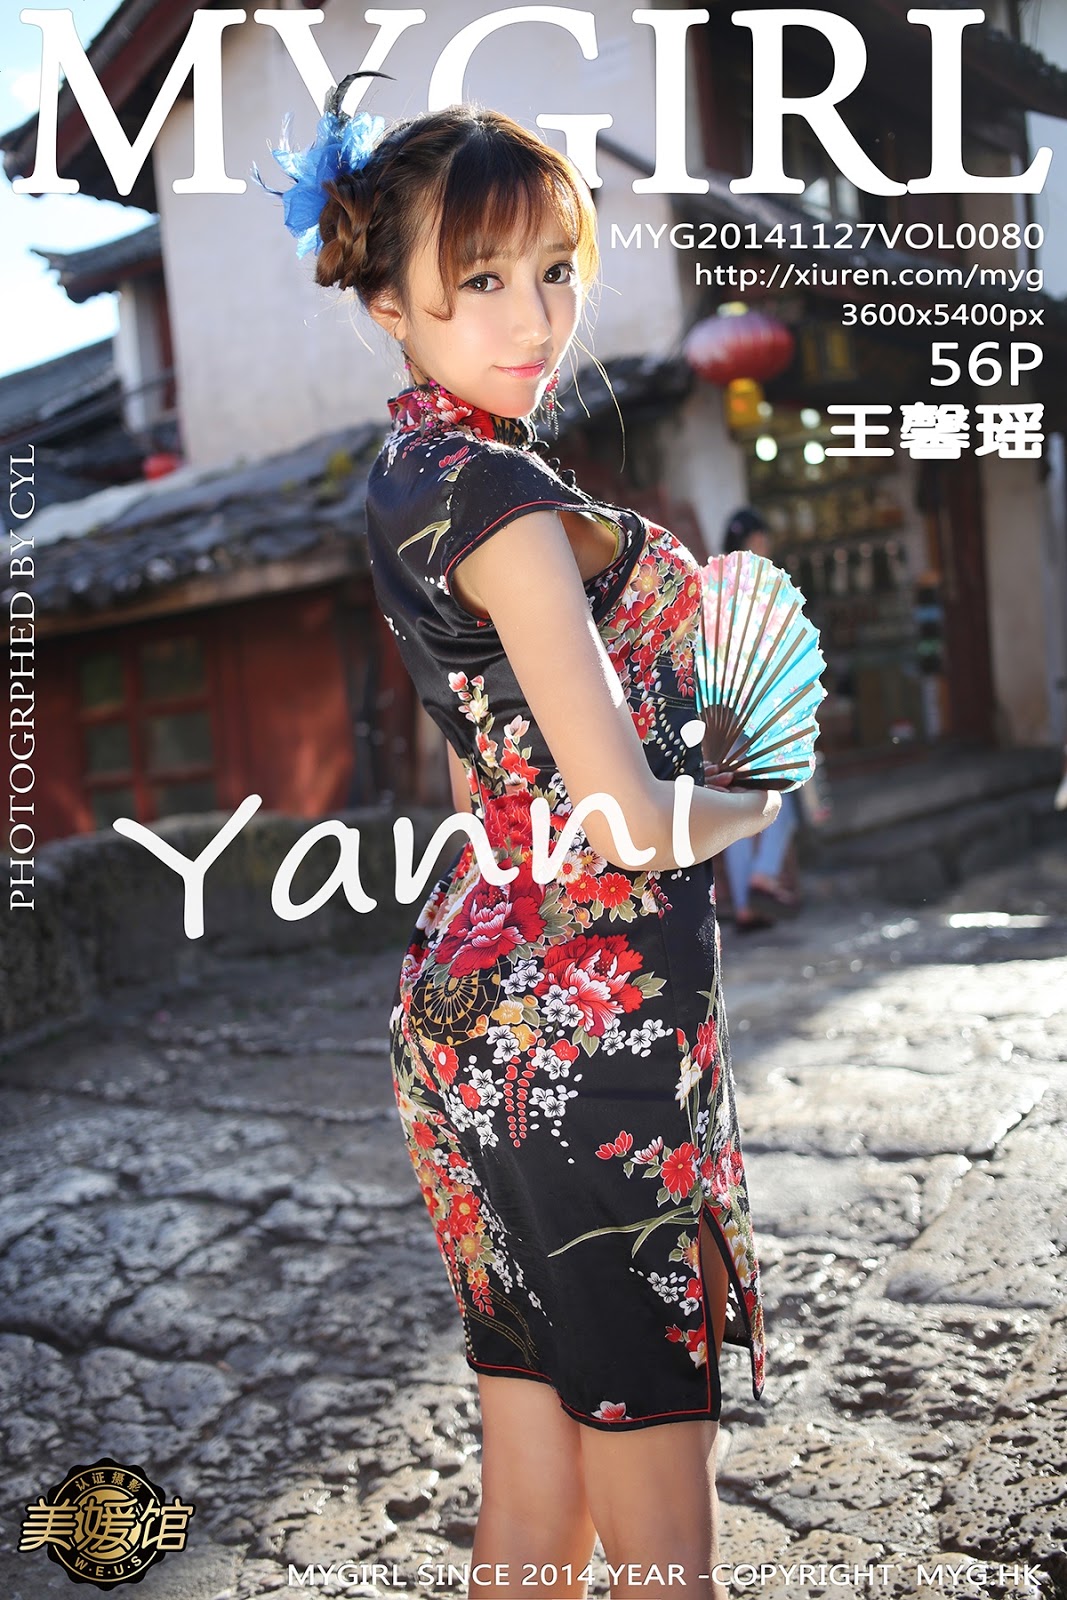 Mygirl Vol 080 Yanni 57 Pics New Asian Beauty Image